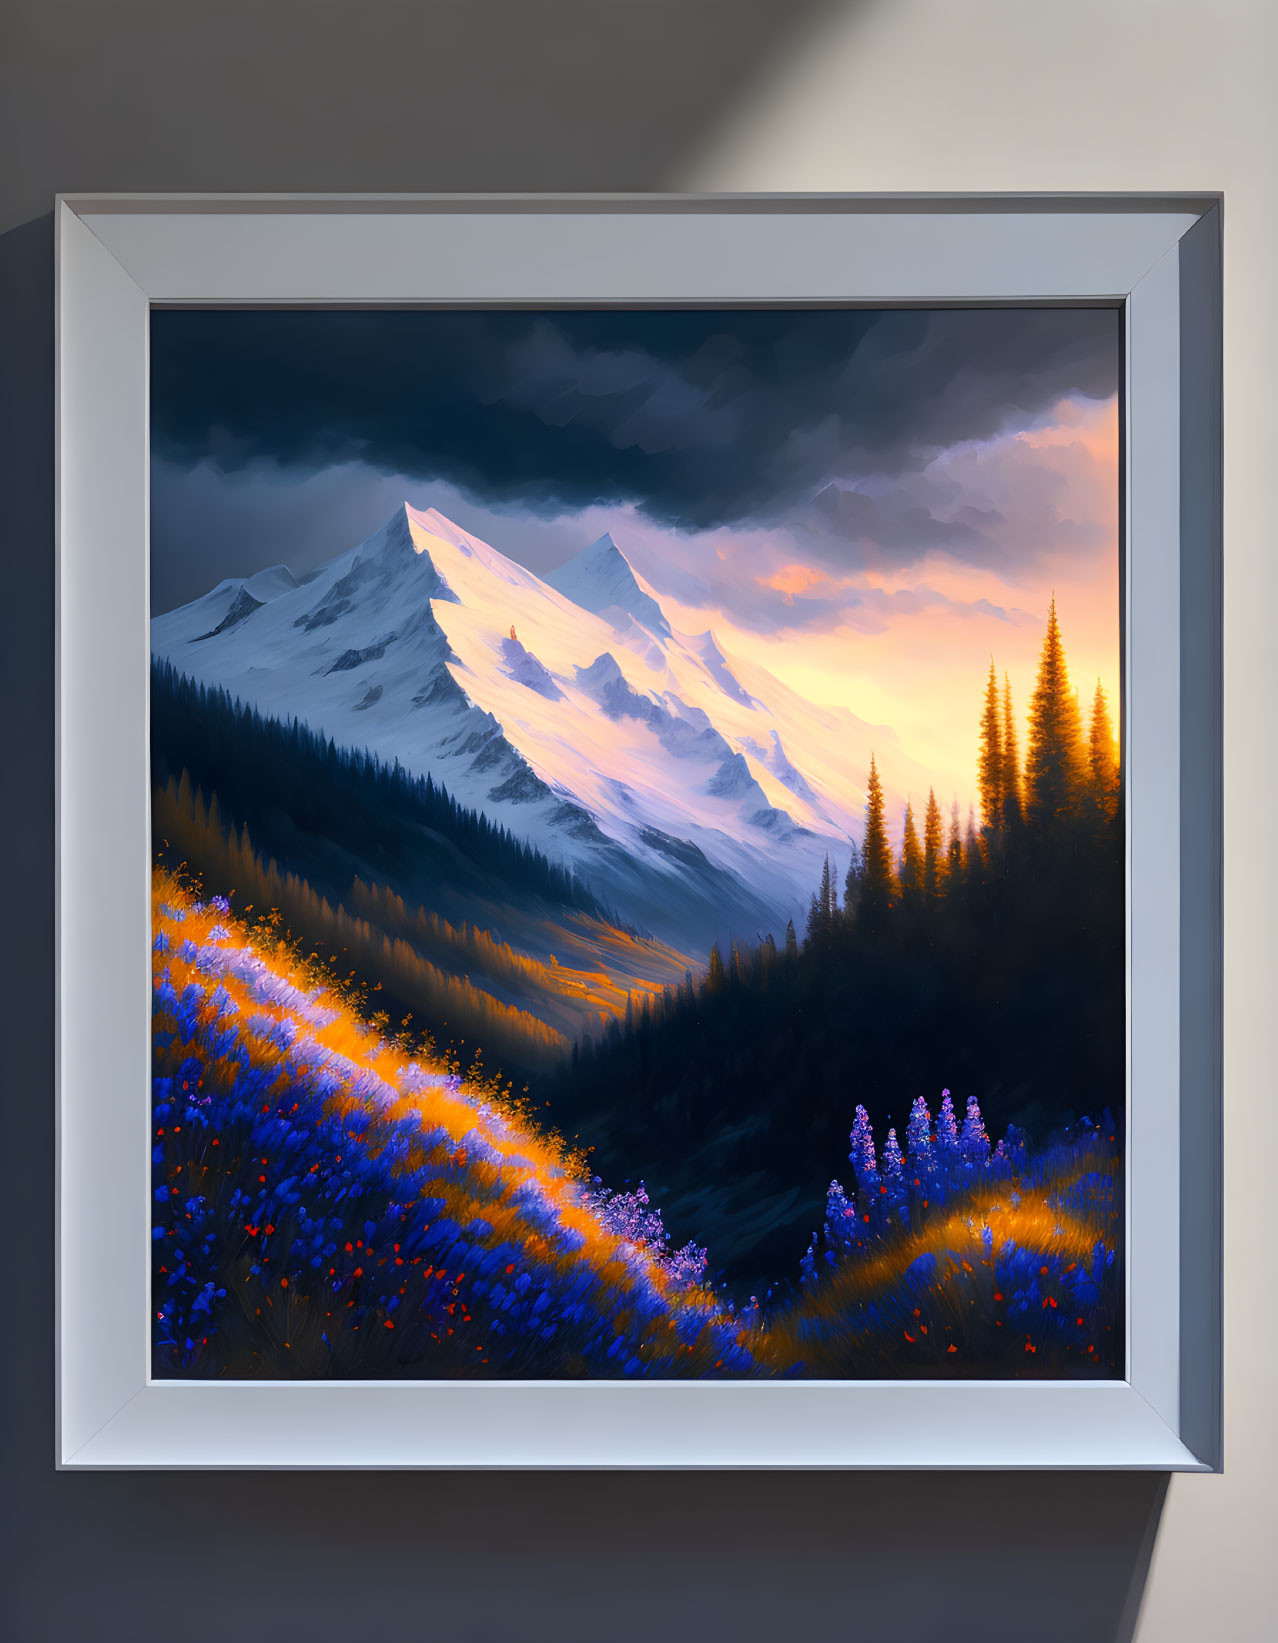 Vibrant mountain landscape with snowy peaks, orange sunset skies, blue and purple flowers